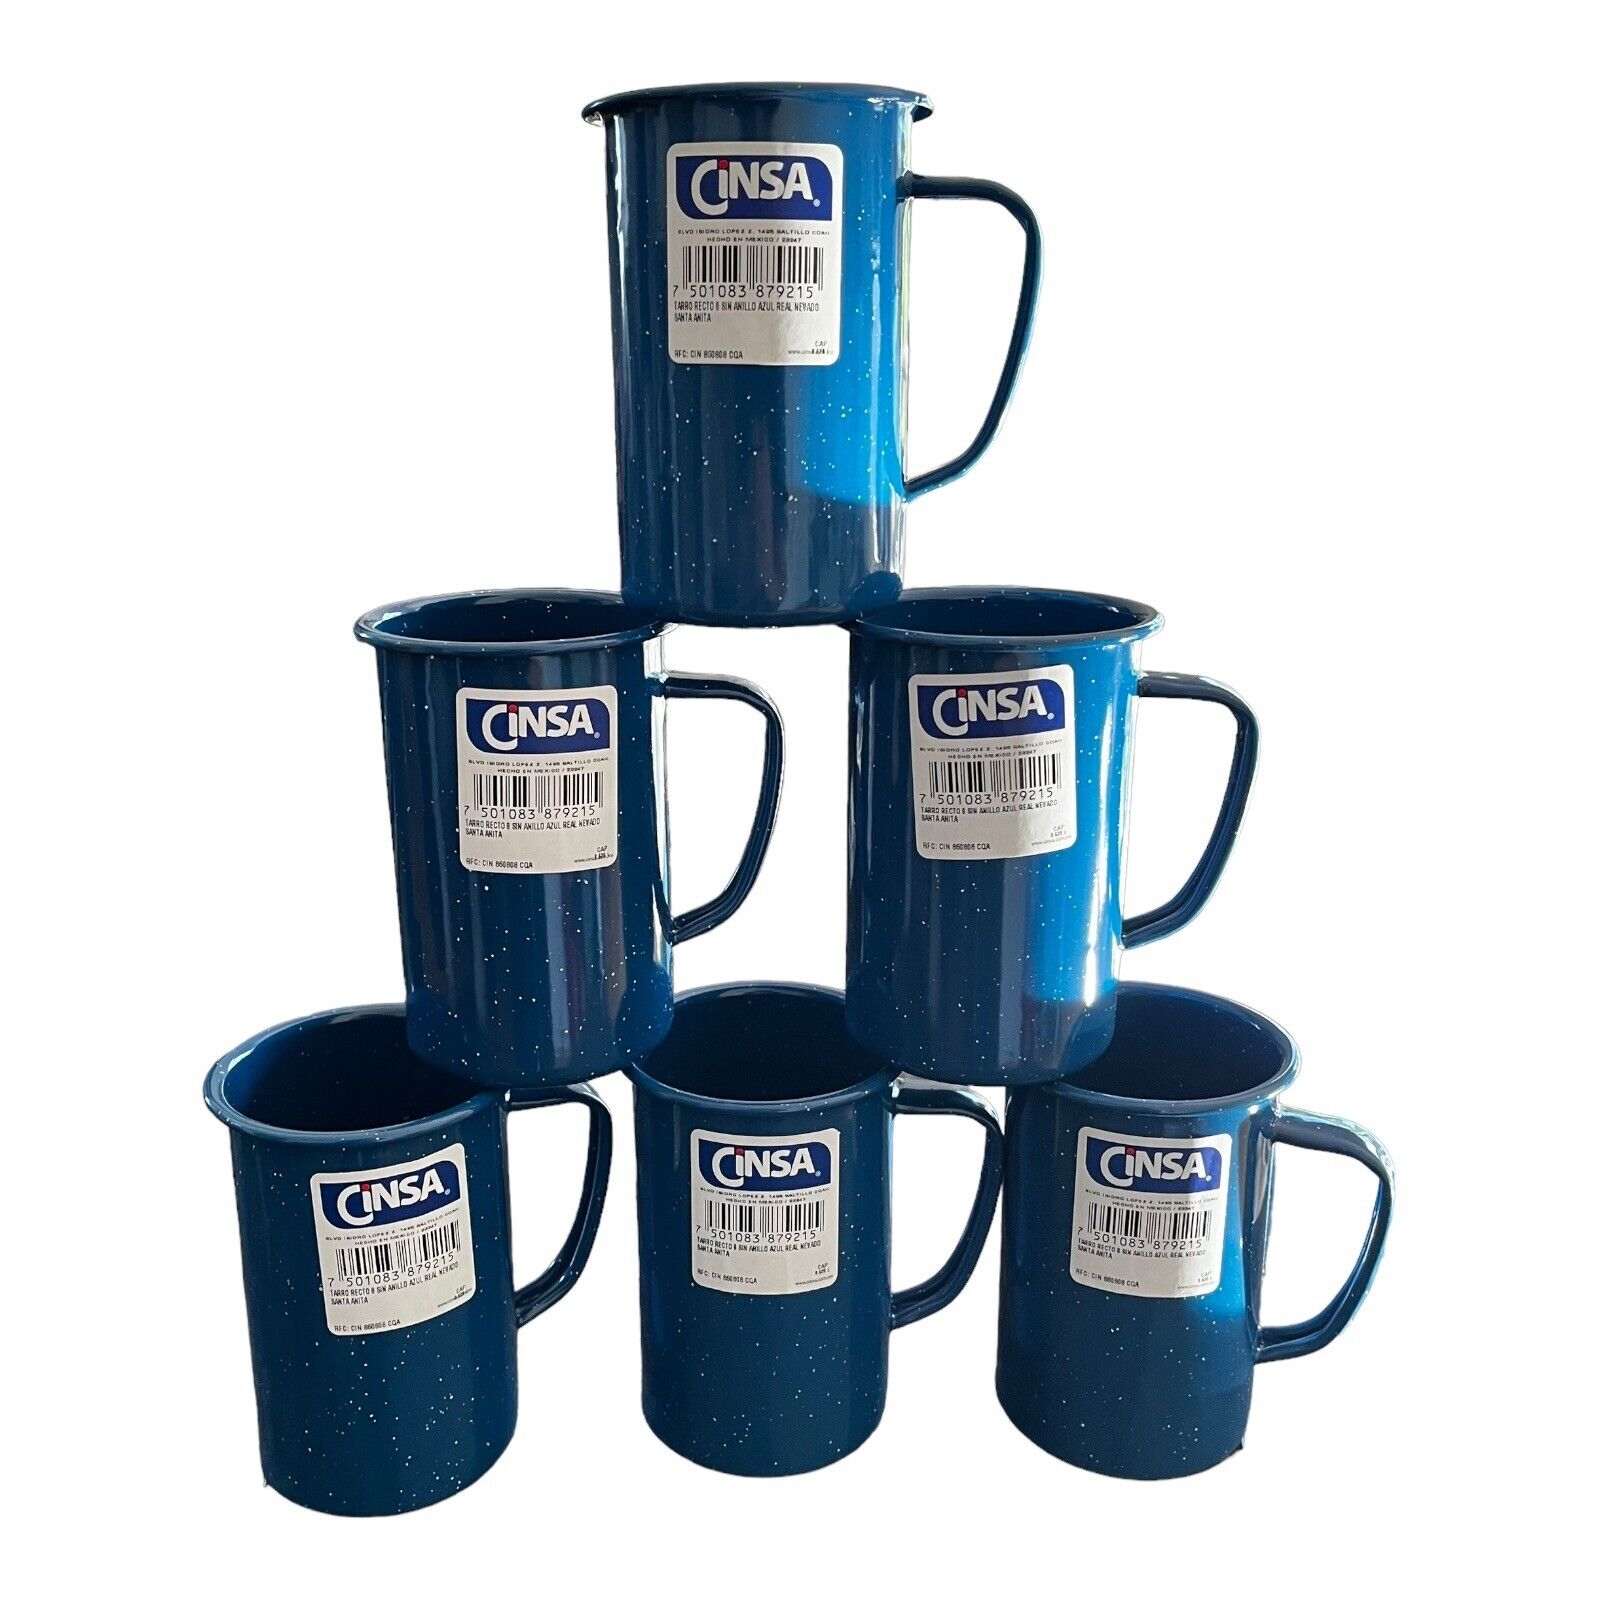 SET OF 6 - Cinsa Enamelware Blue Speckled Coffee Mugs Tea Camping - 20oz NEW